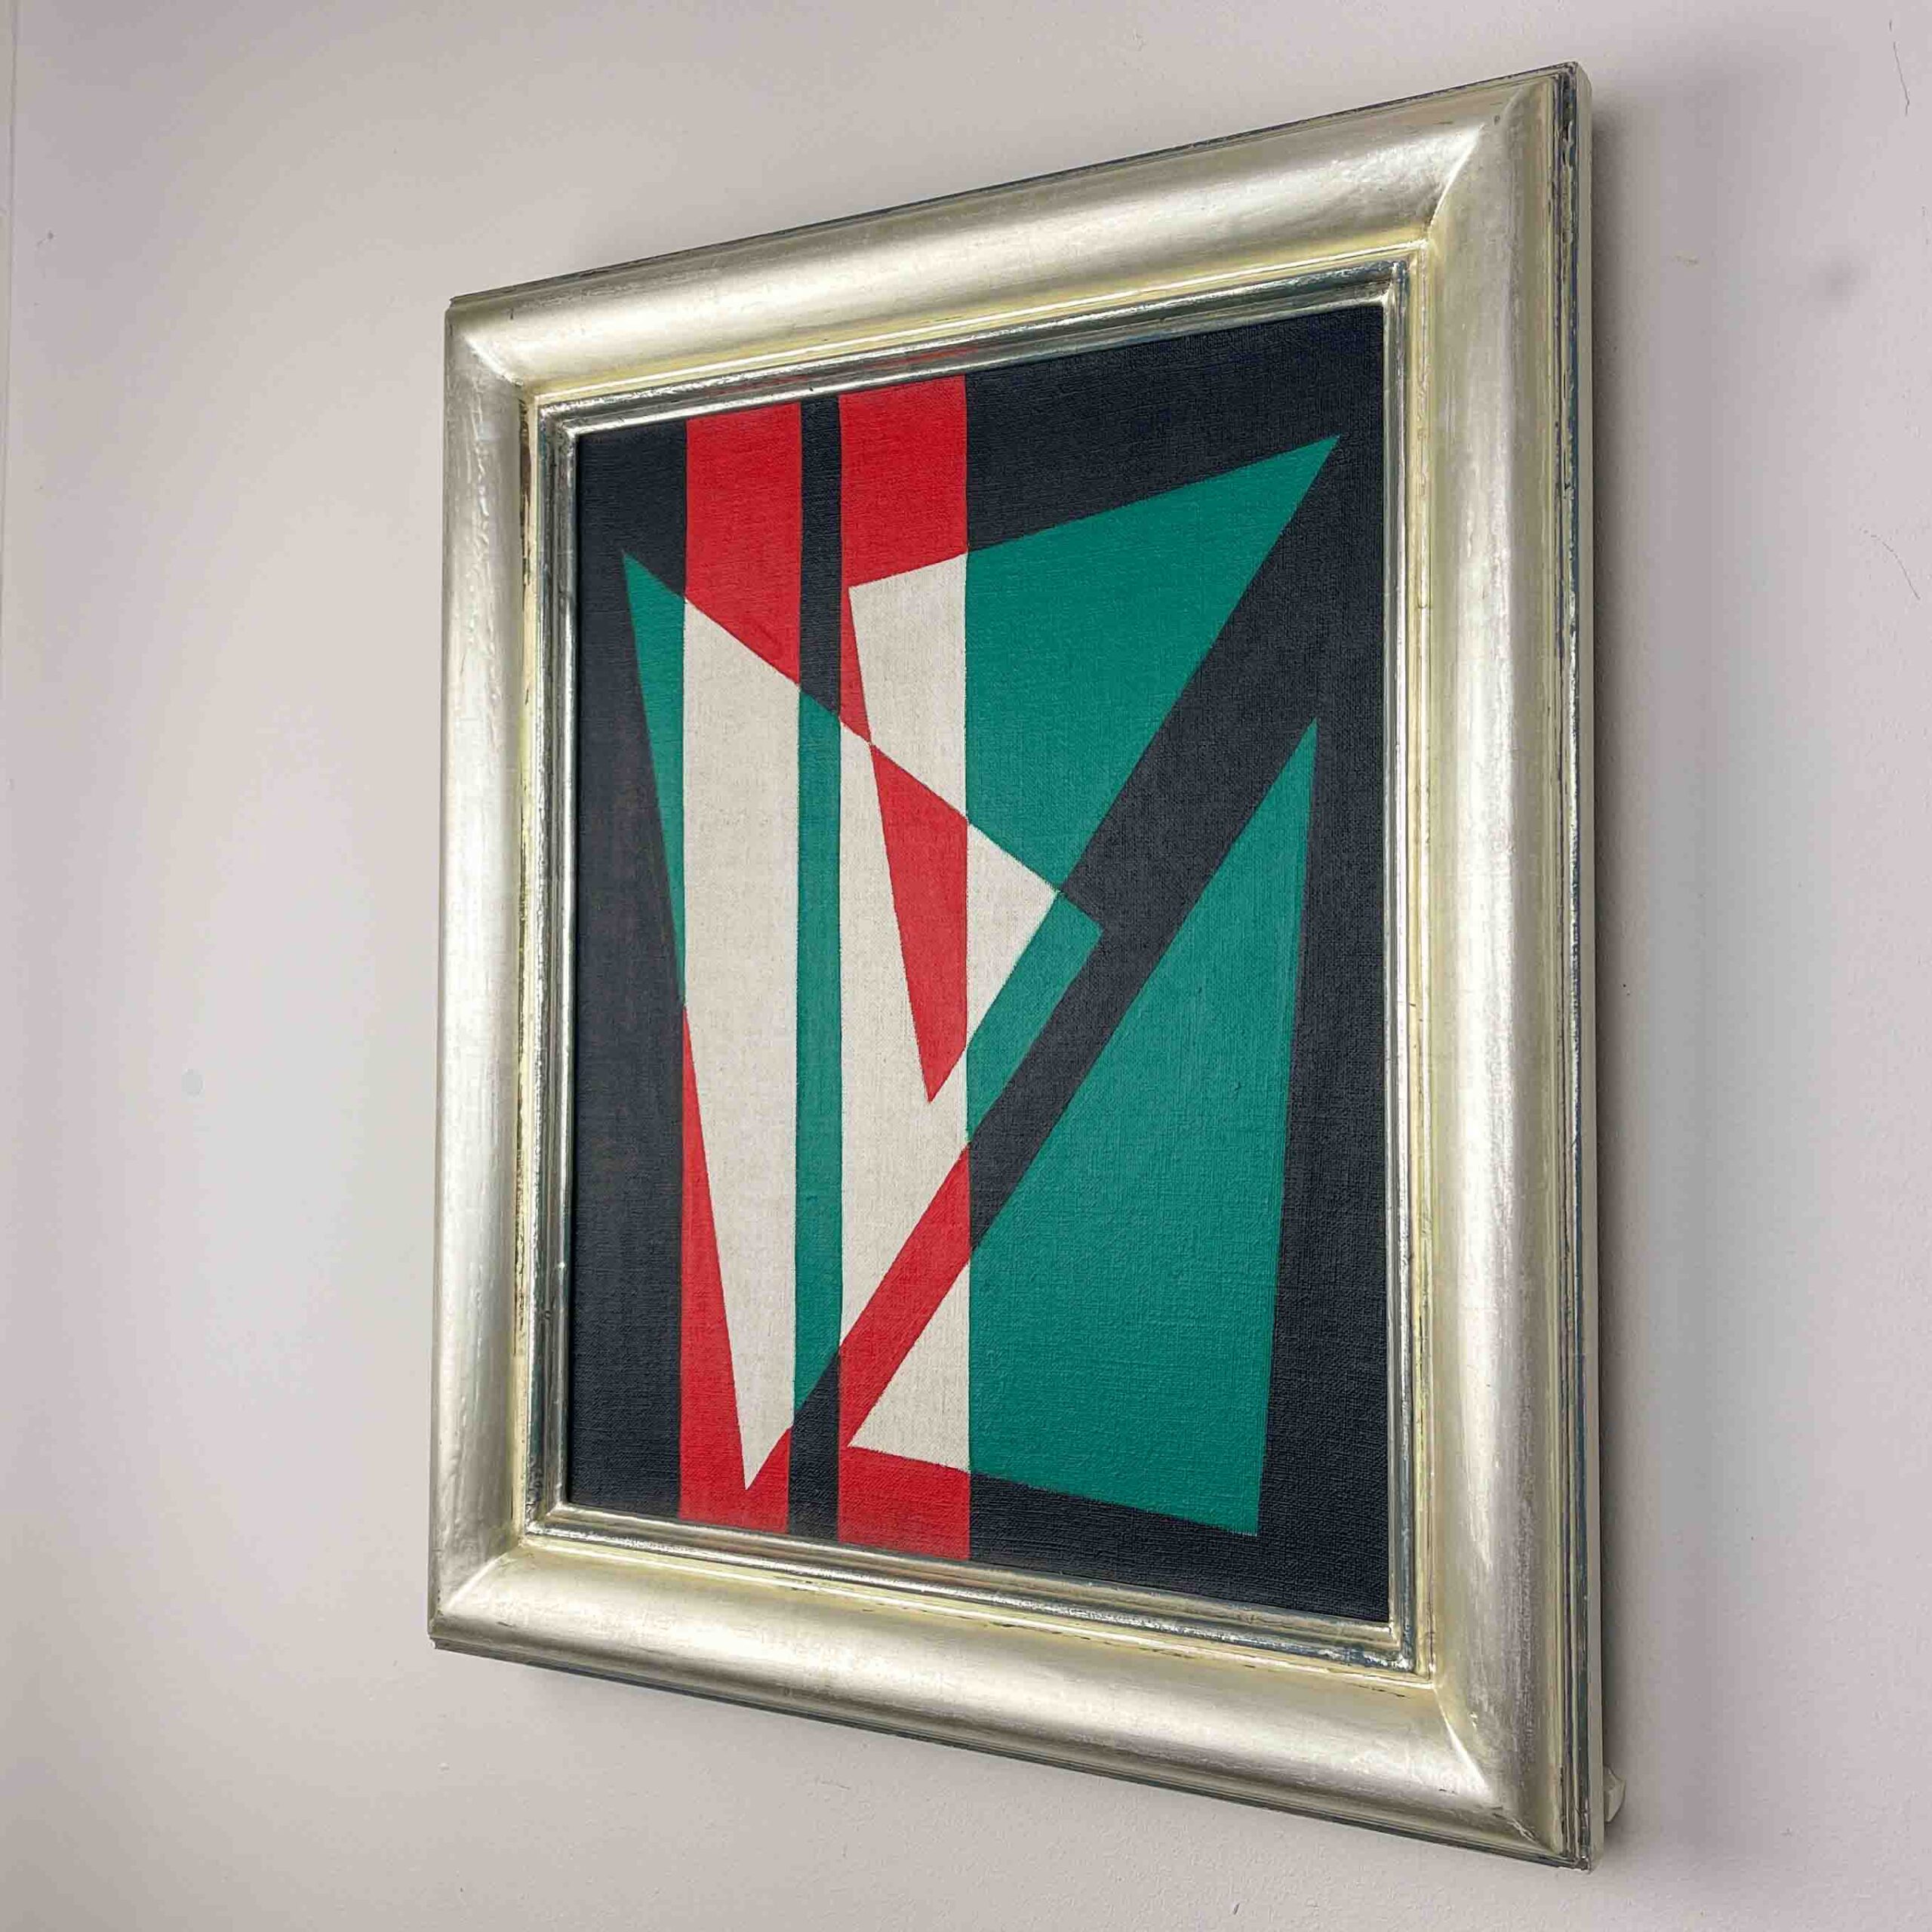 Siep van den Berg - Abstract composition, 1954 - tempera on canvas, profesionally framed